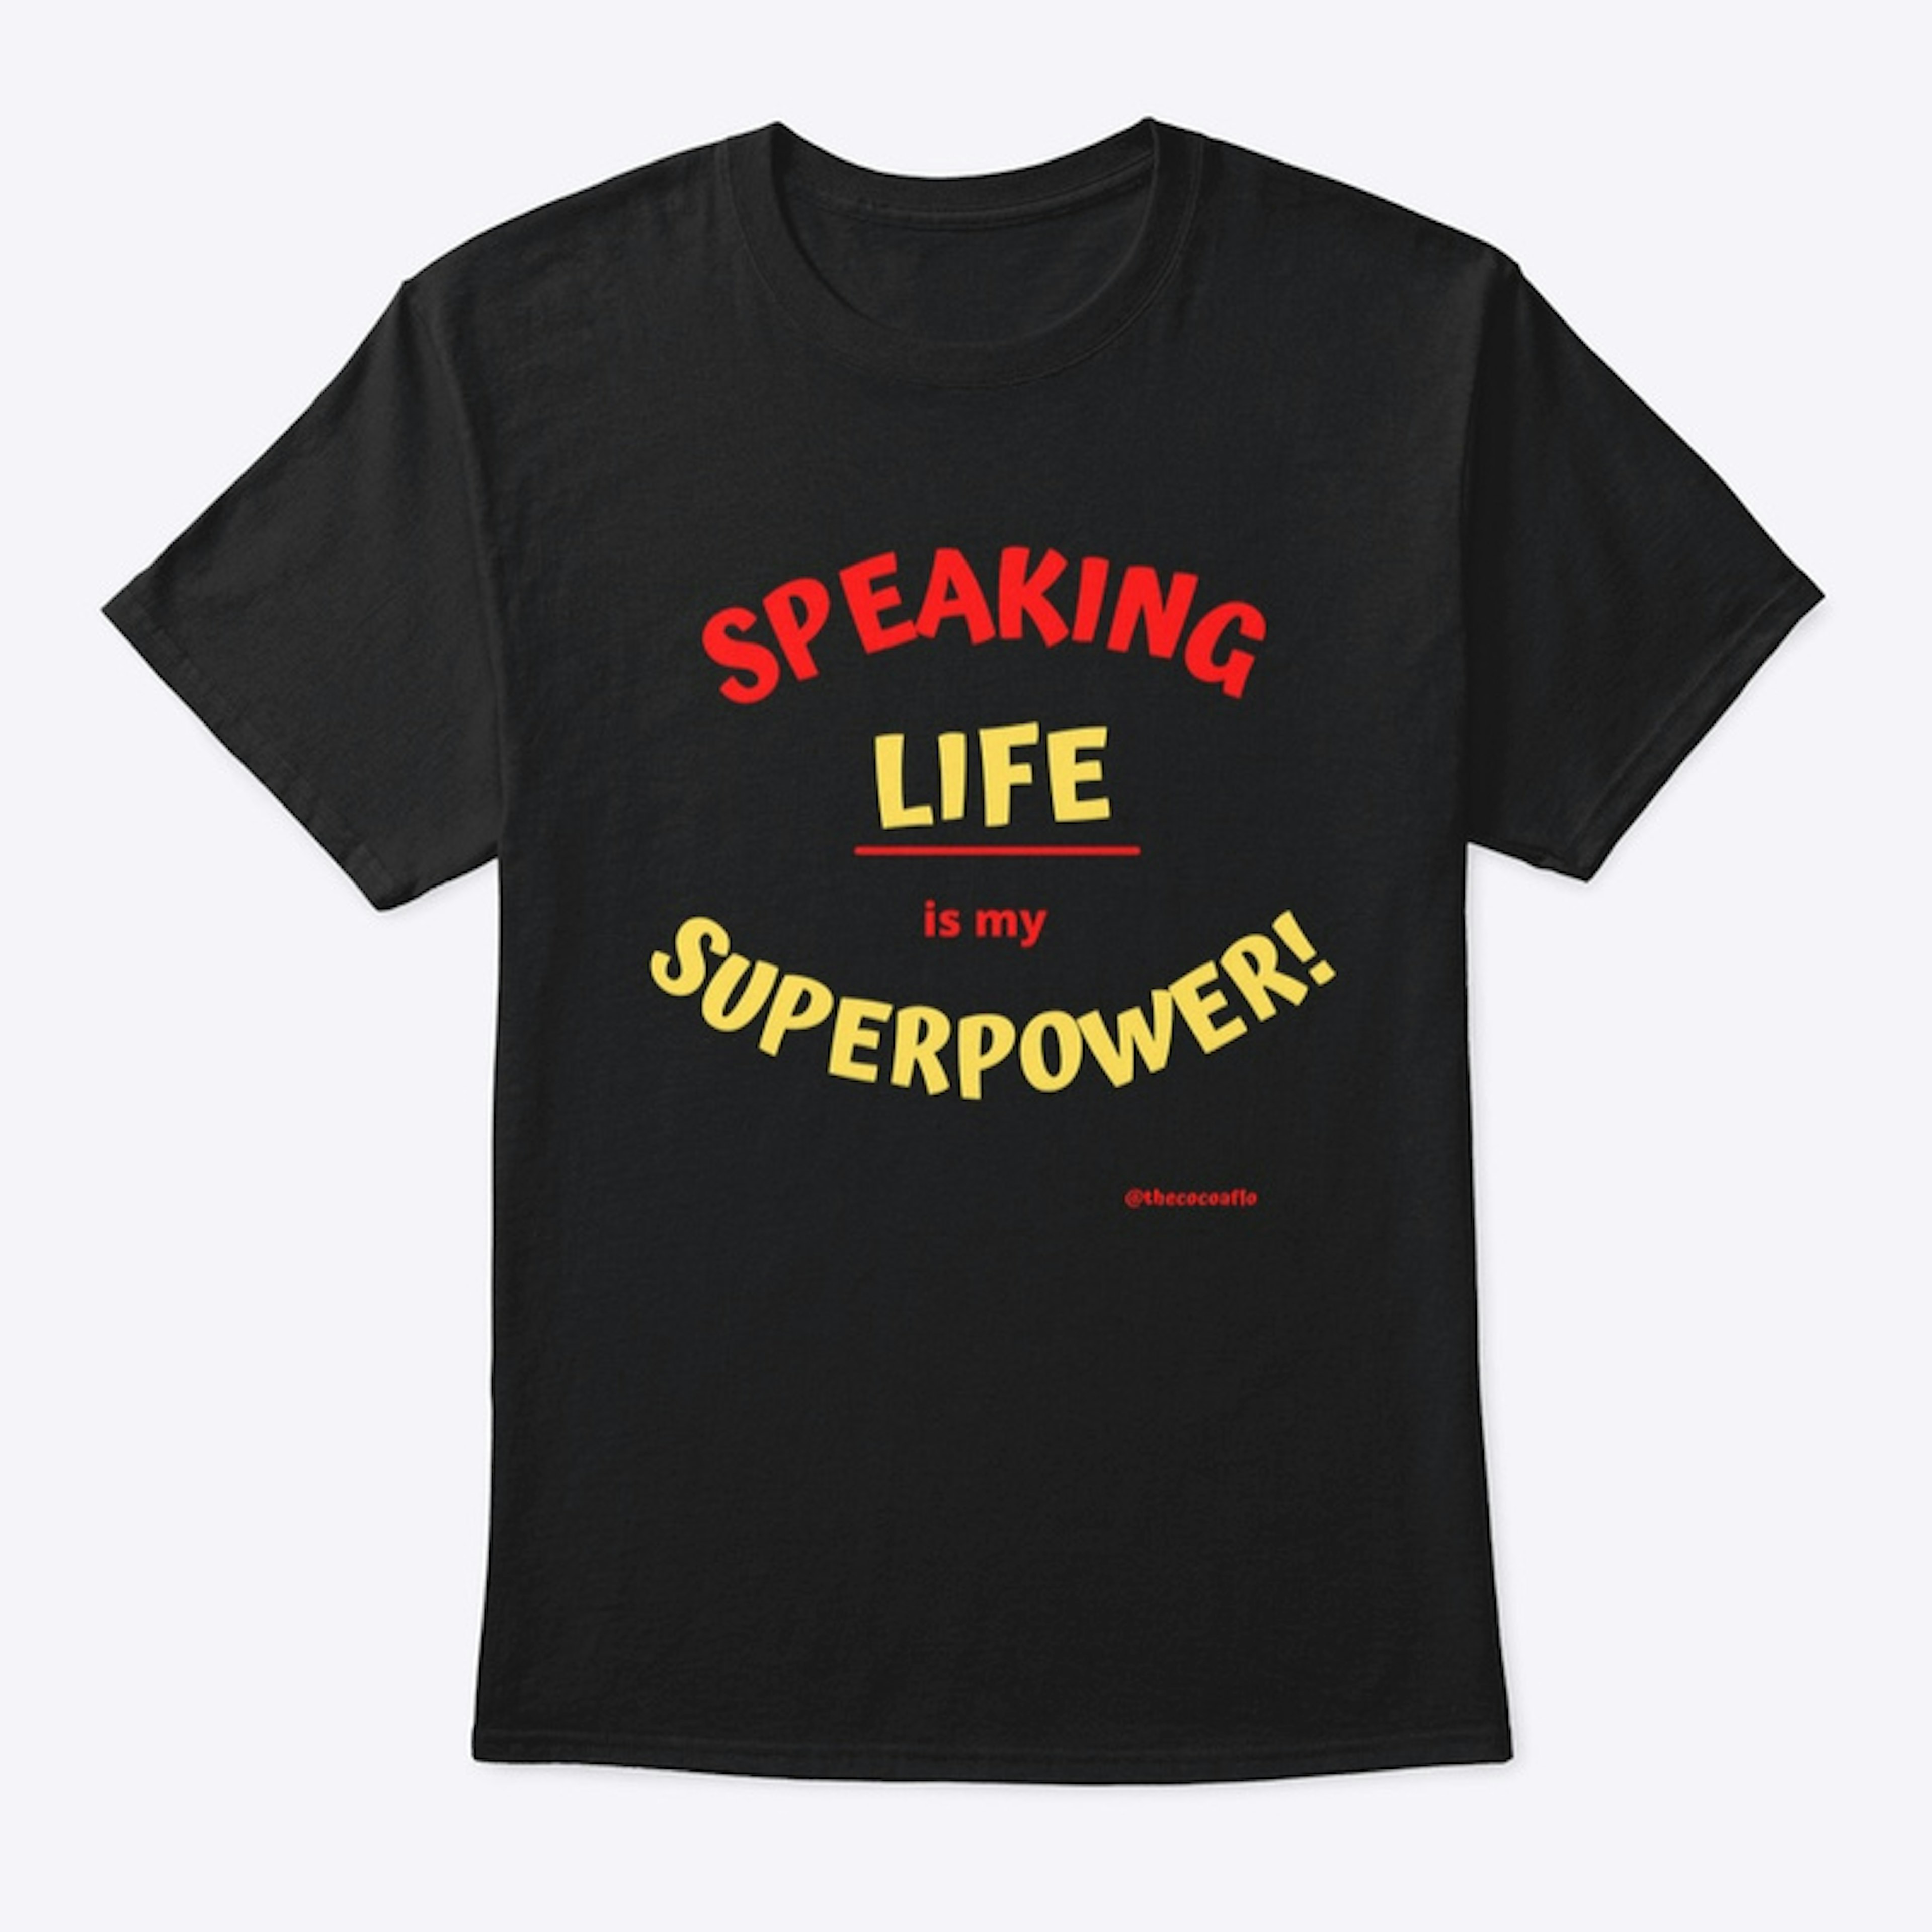 Speaking Life is my Superpower!